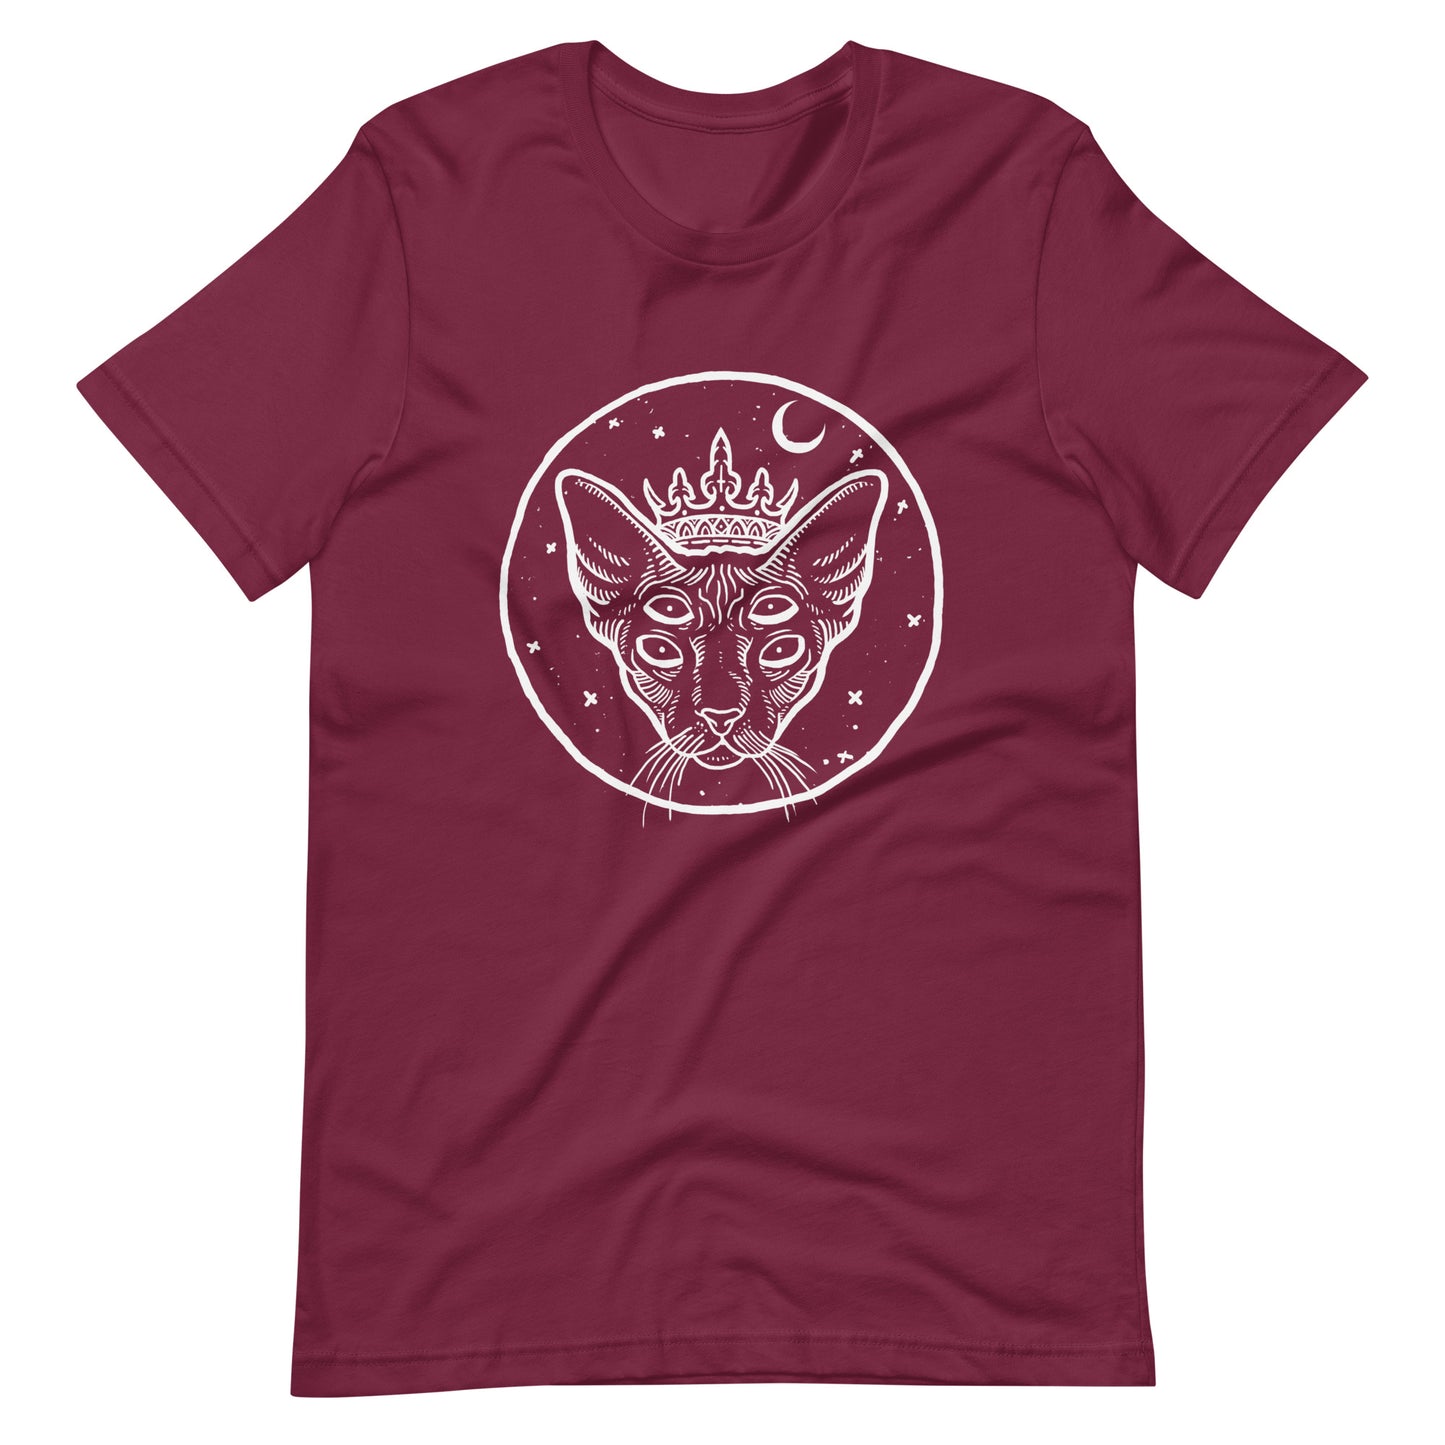 The Ruler - Men's t-shirt - Maroon Front